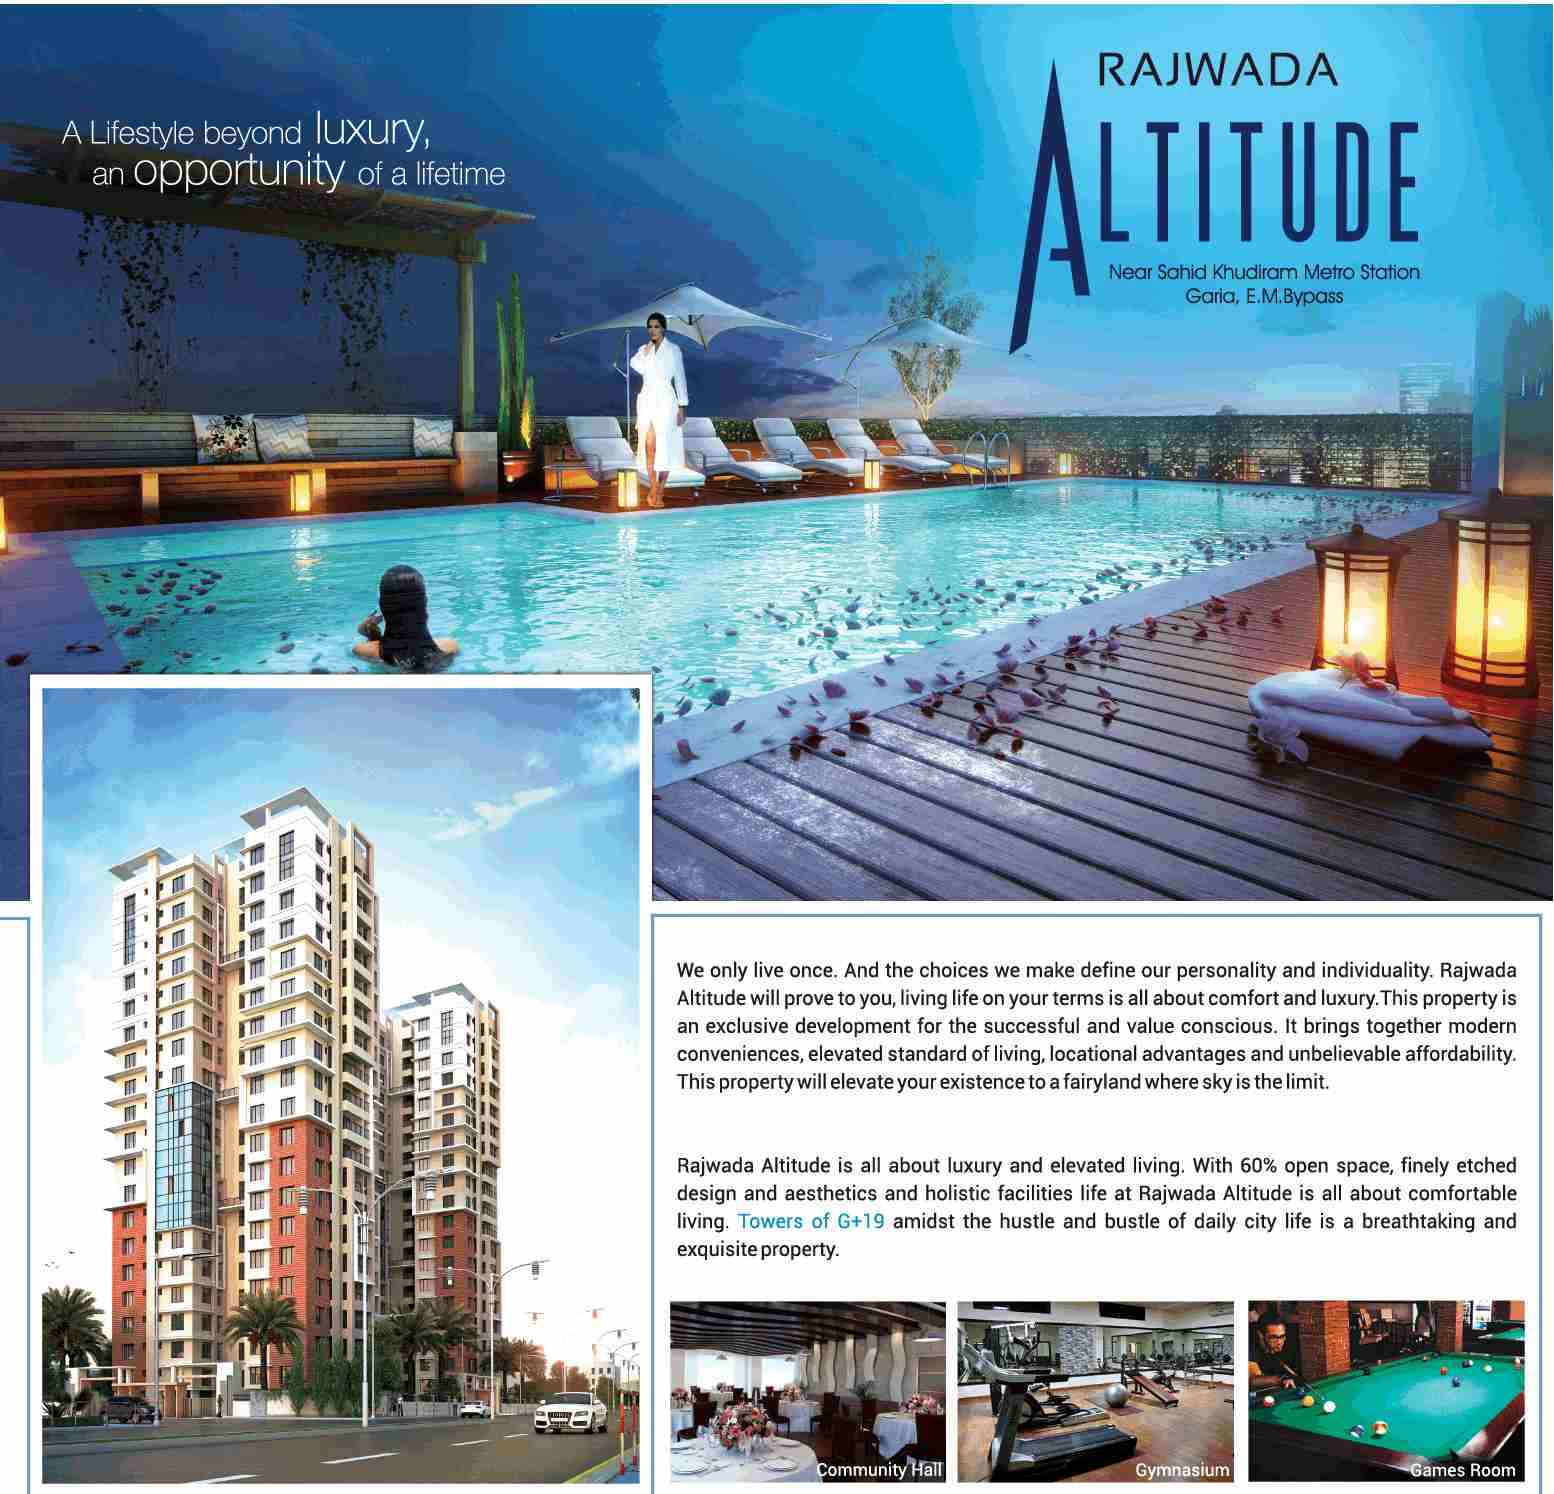 Experience lifestyle beyond luxury & opportunity of lifetime at Rajwada Altitude in Kolkata